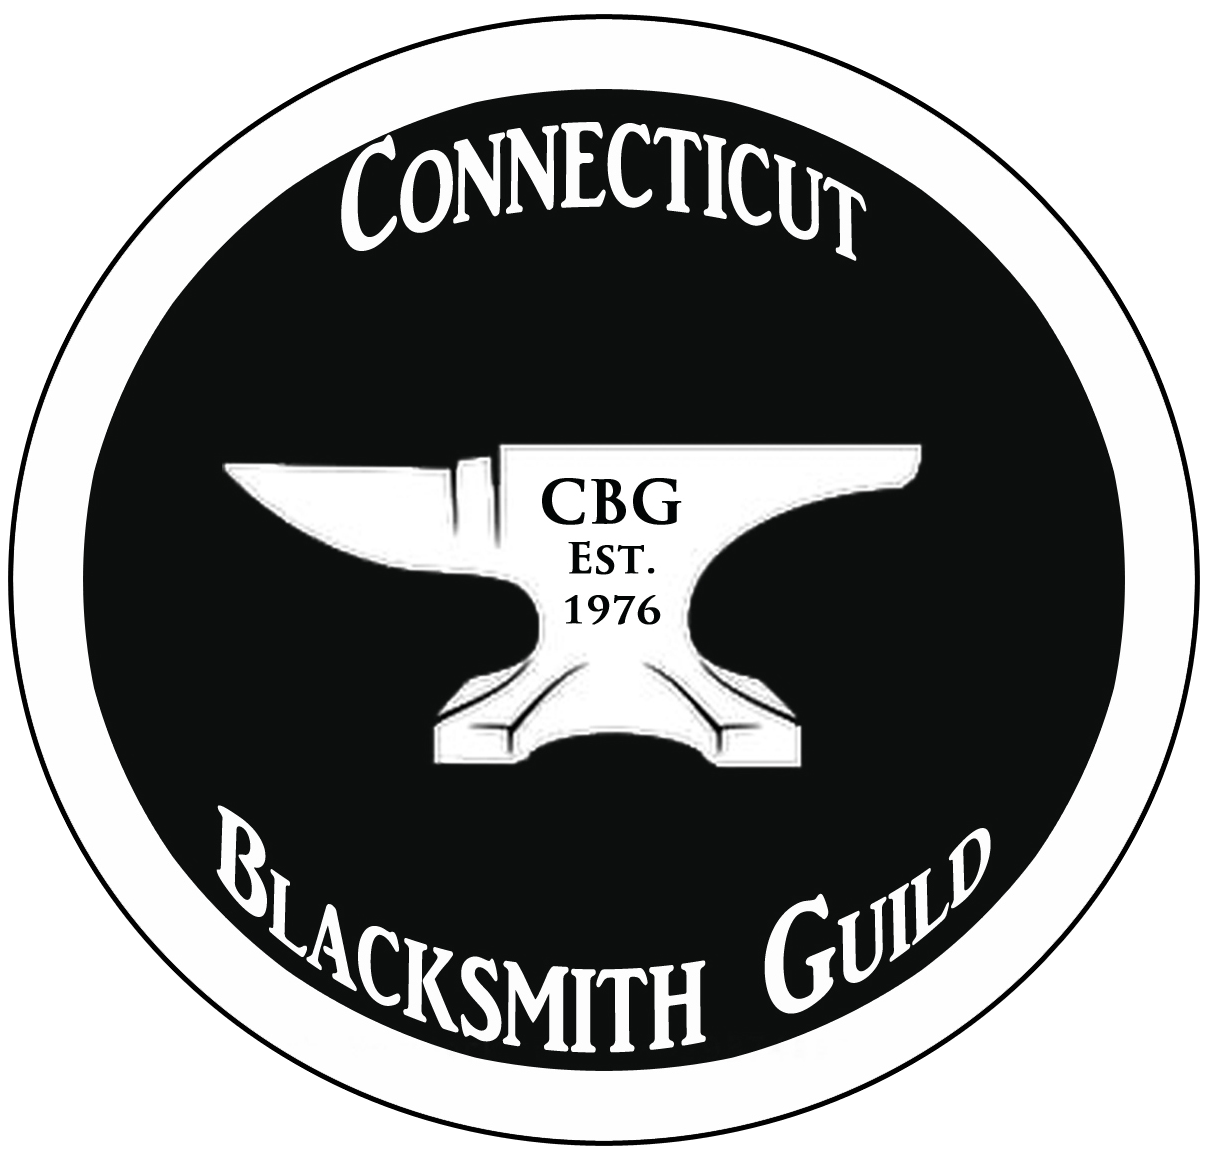 Connecticut Blacksmith Guild